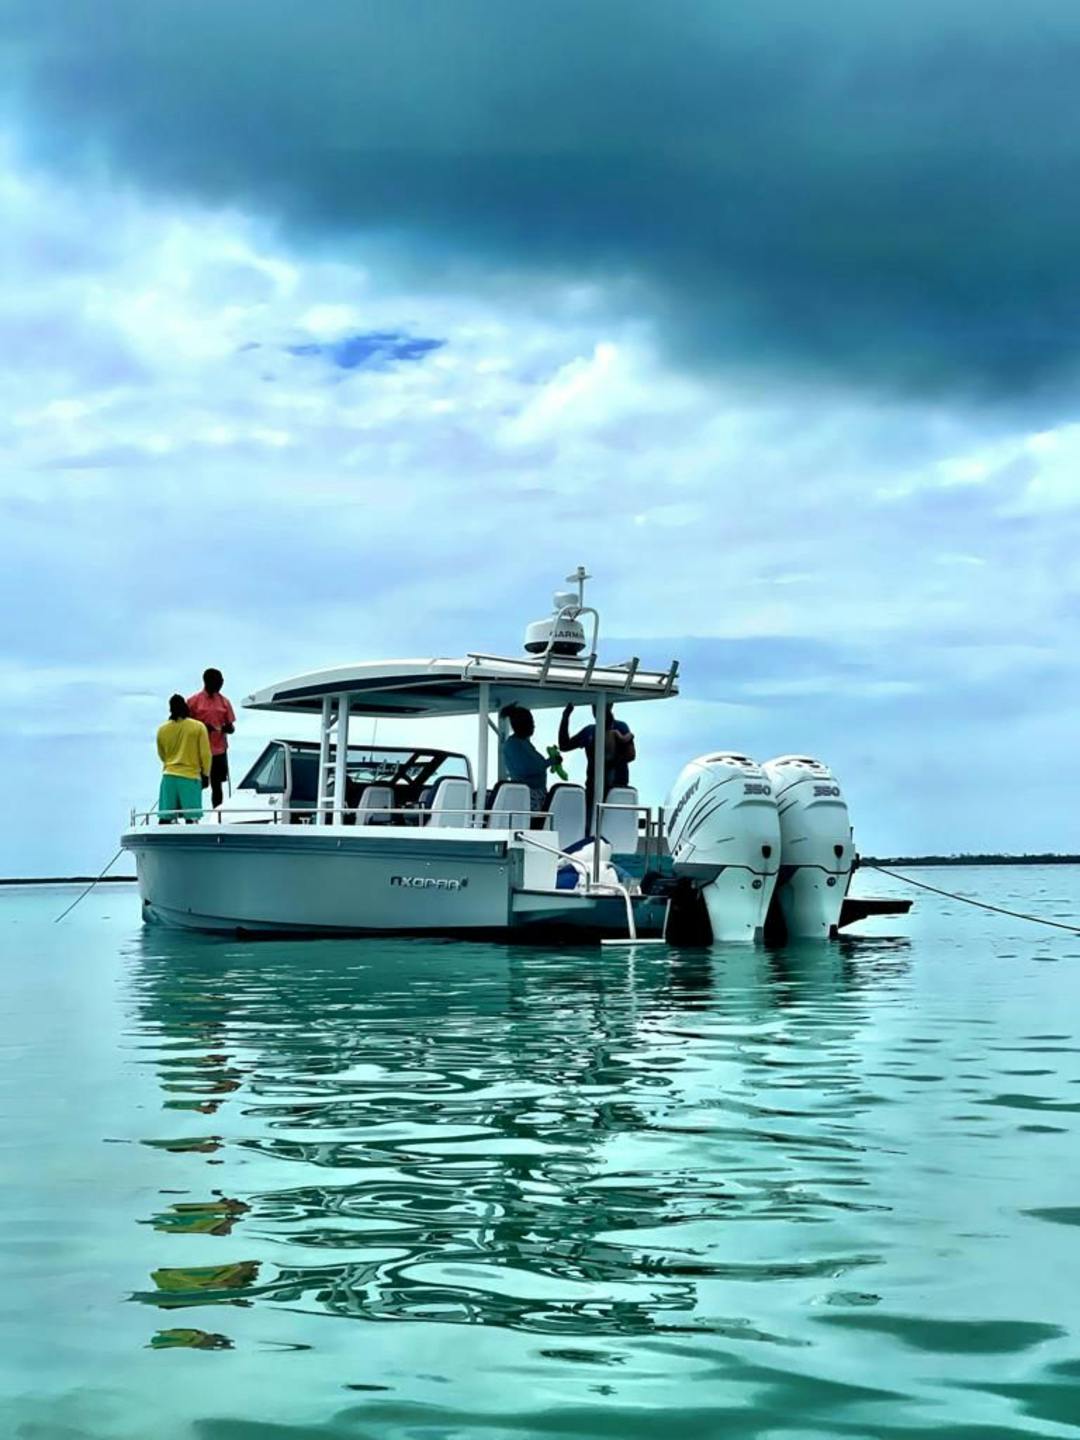 37' Axopar luxury charter yacht - Old Fort Bay, Nassau, The Bahamas - 2